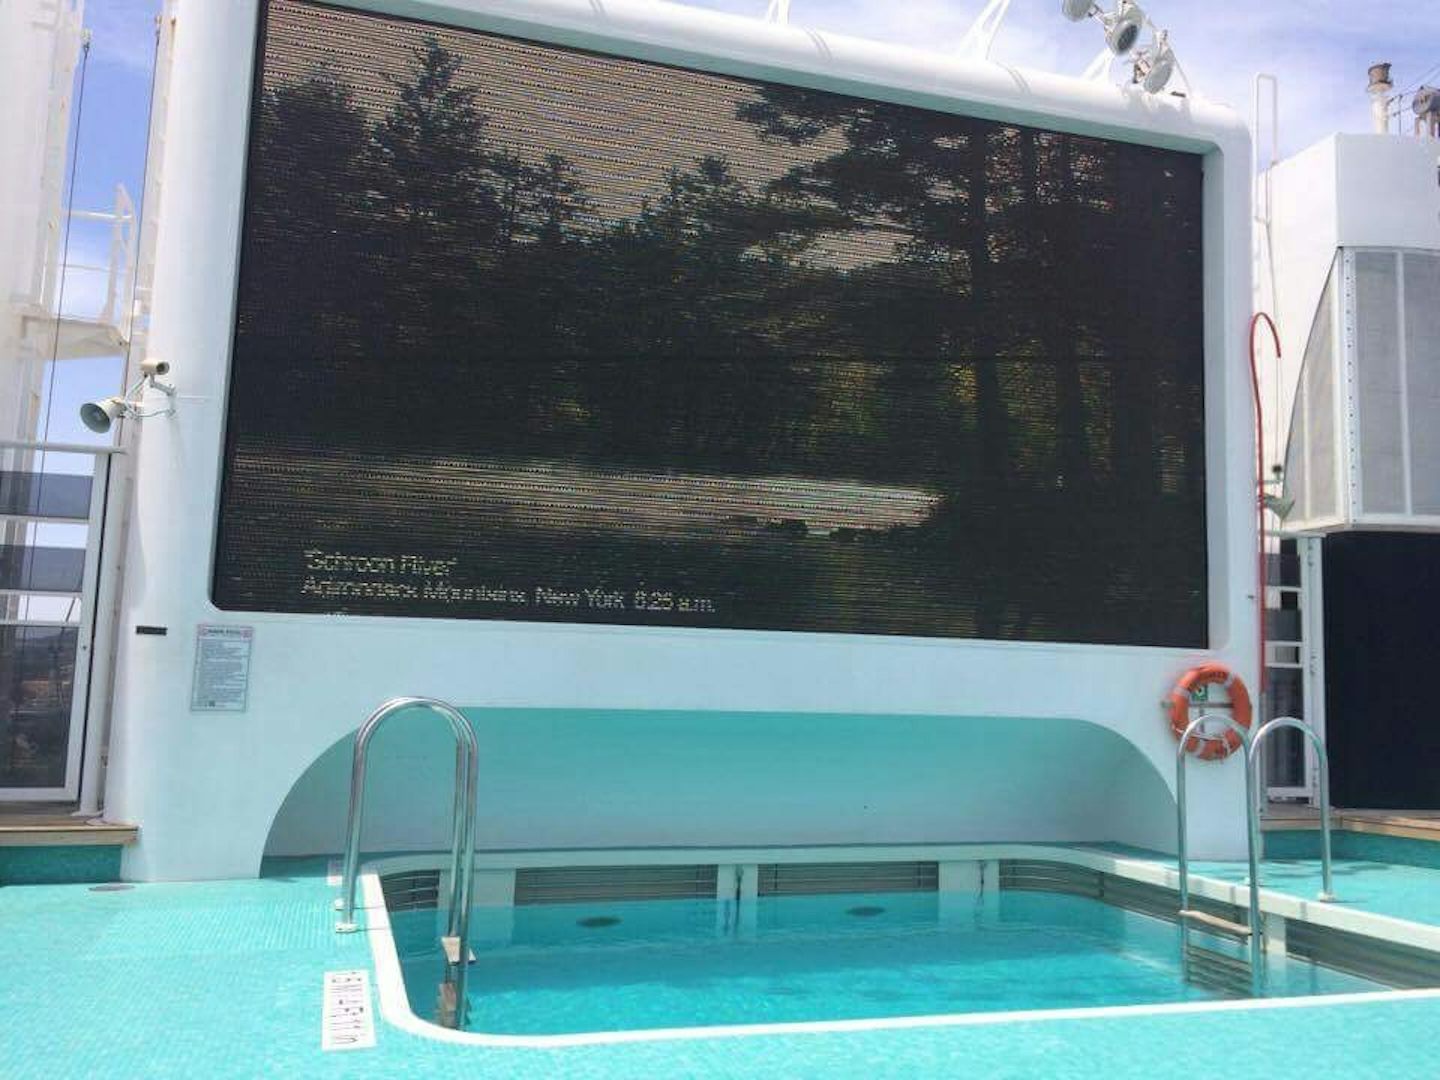 Cinema screen at adult pool